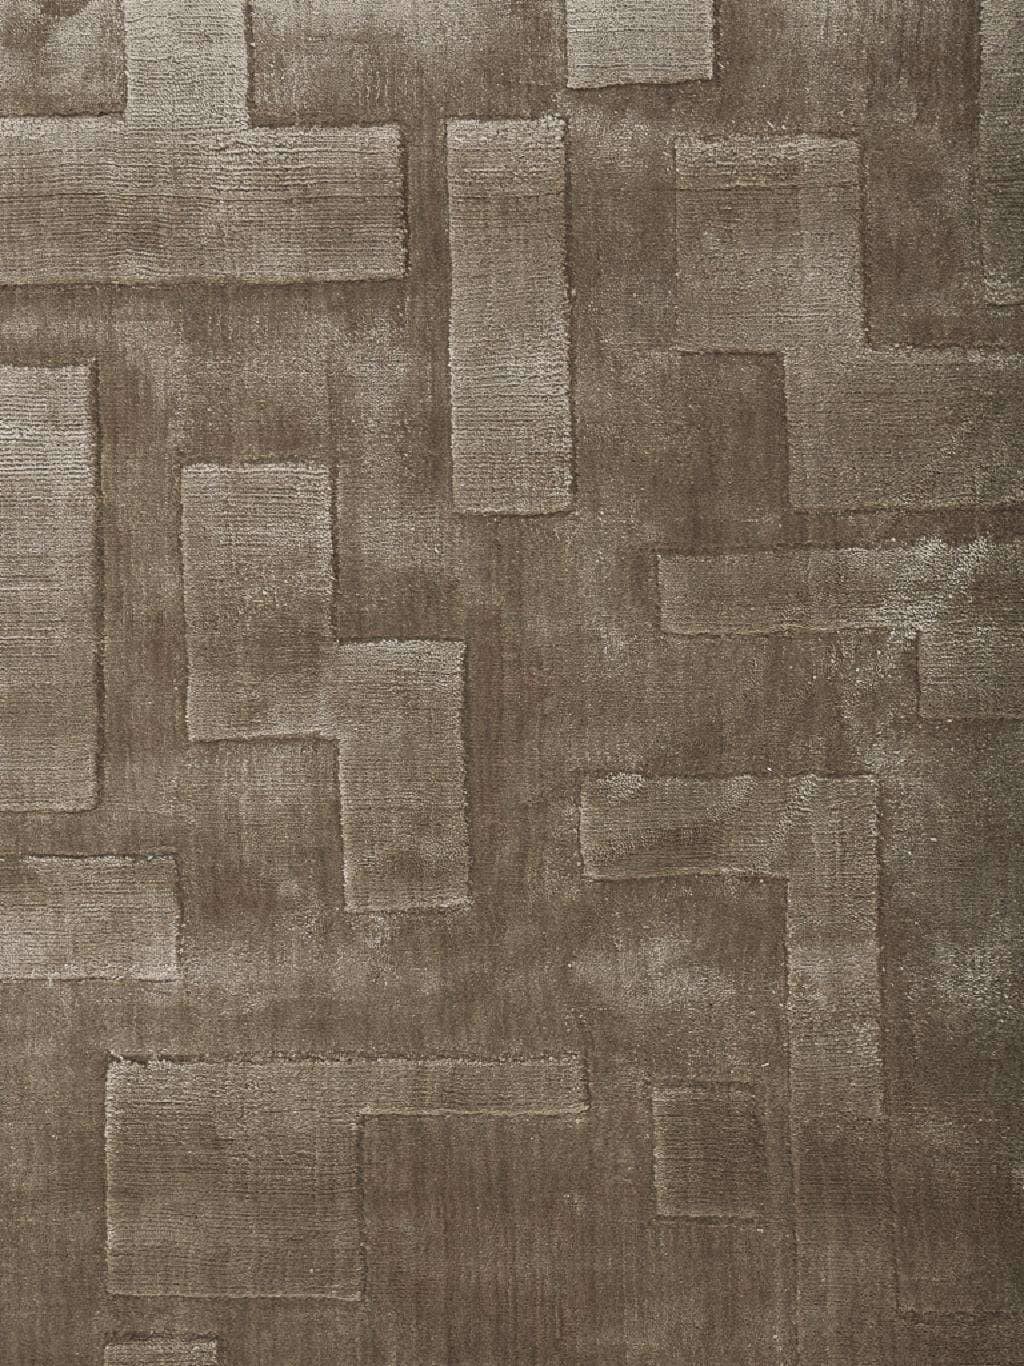 Tapete Indiano Karev Geométrico Maze Vintage Bege 2,50 x 3,50m